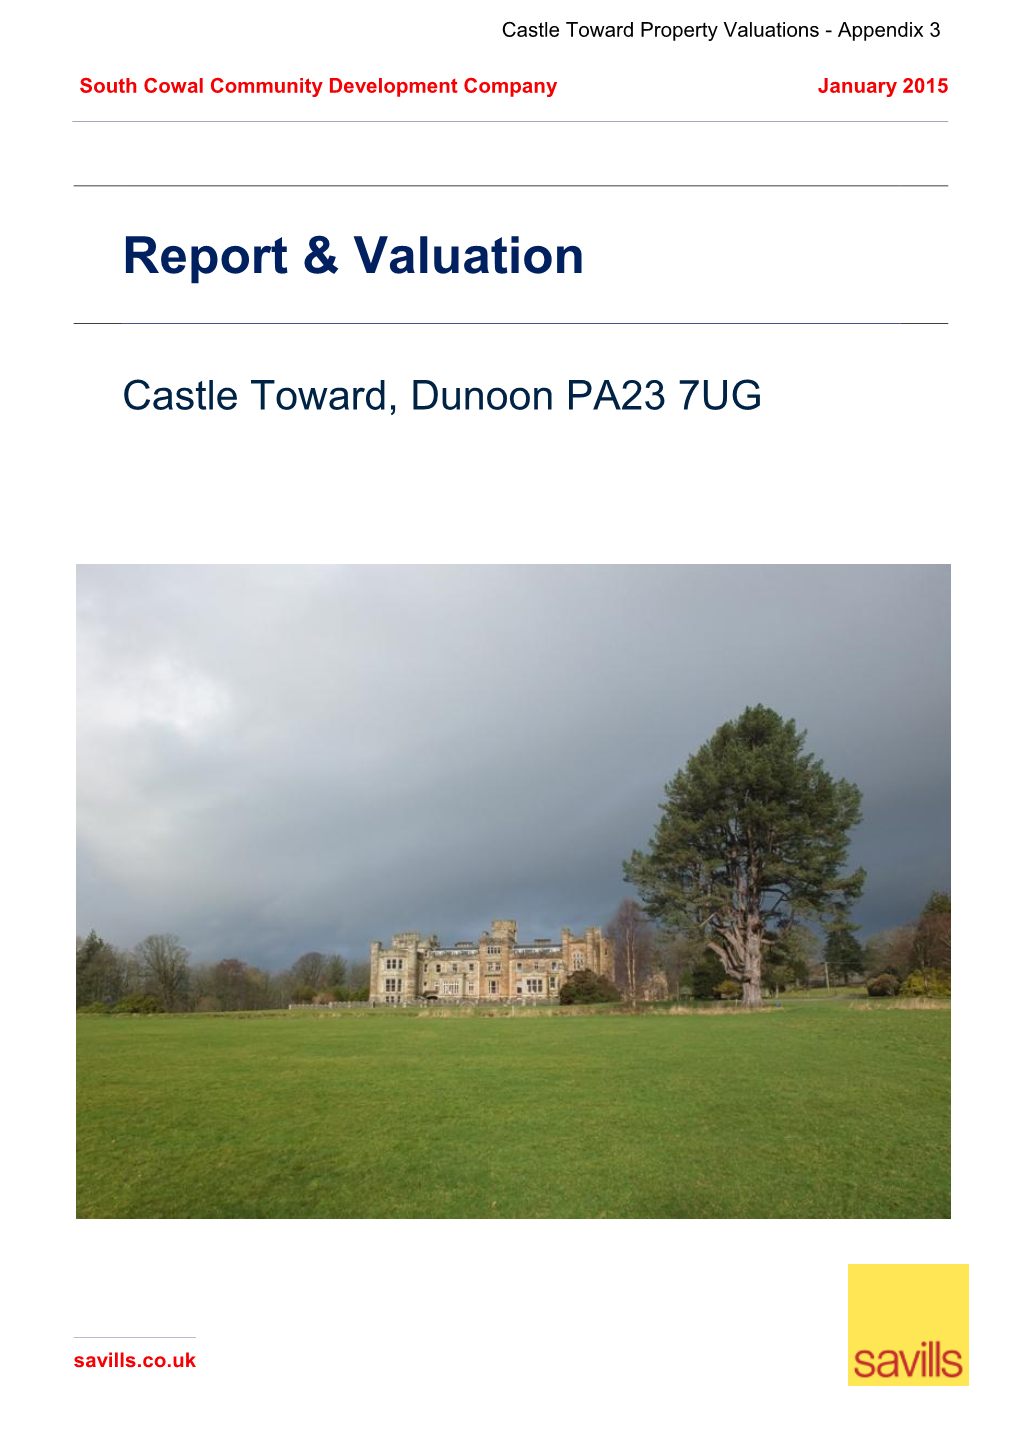 Castle Toward Property Valuations